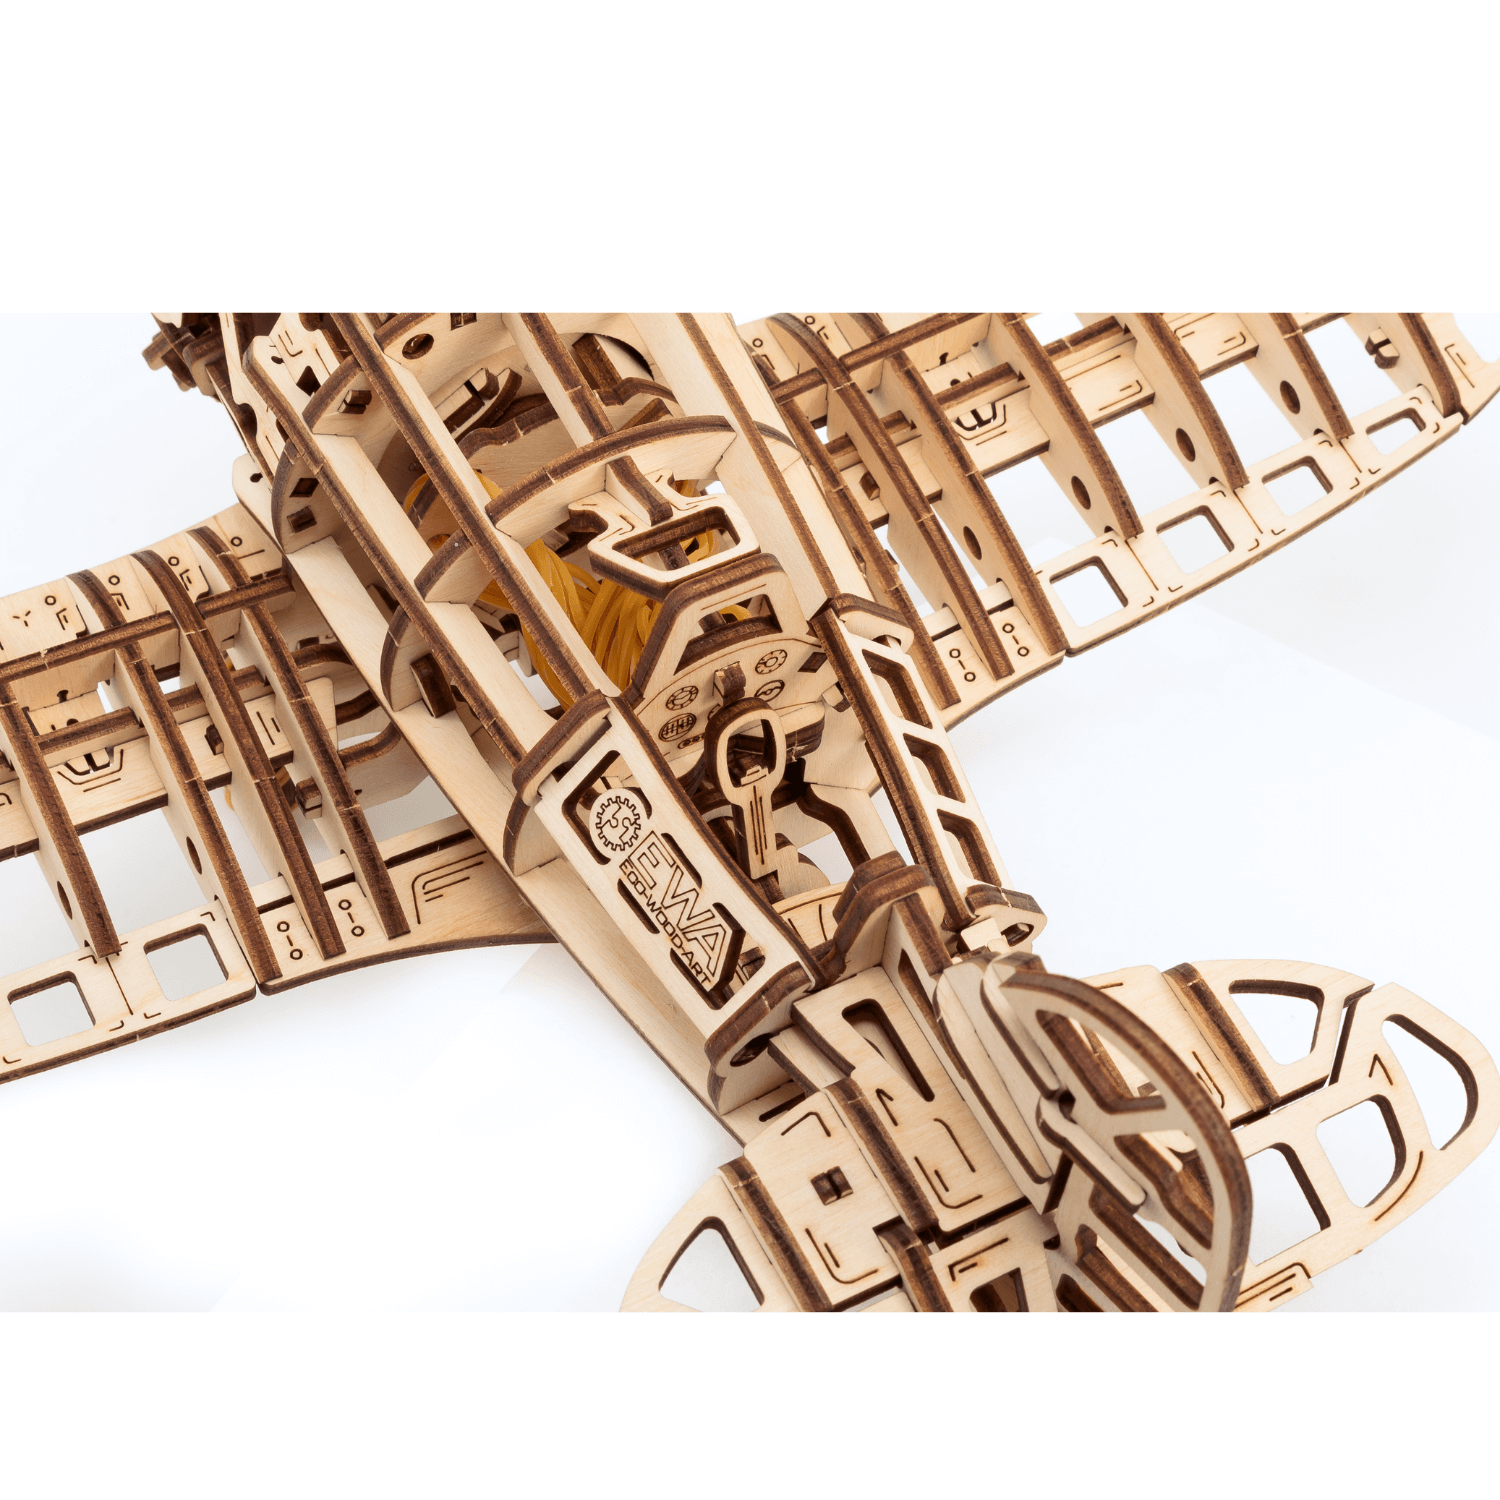 Mechanisches Flugzeug-Mechanisches Holzpuzzle-Eco-Wood-Art--